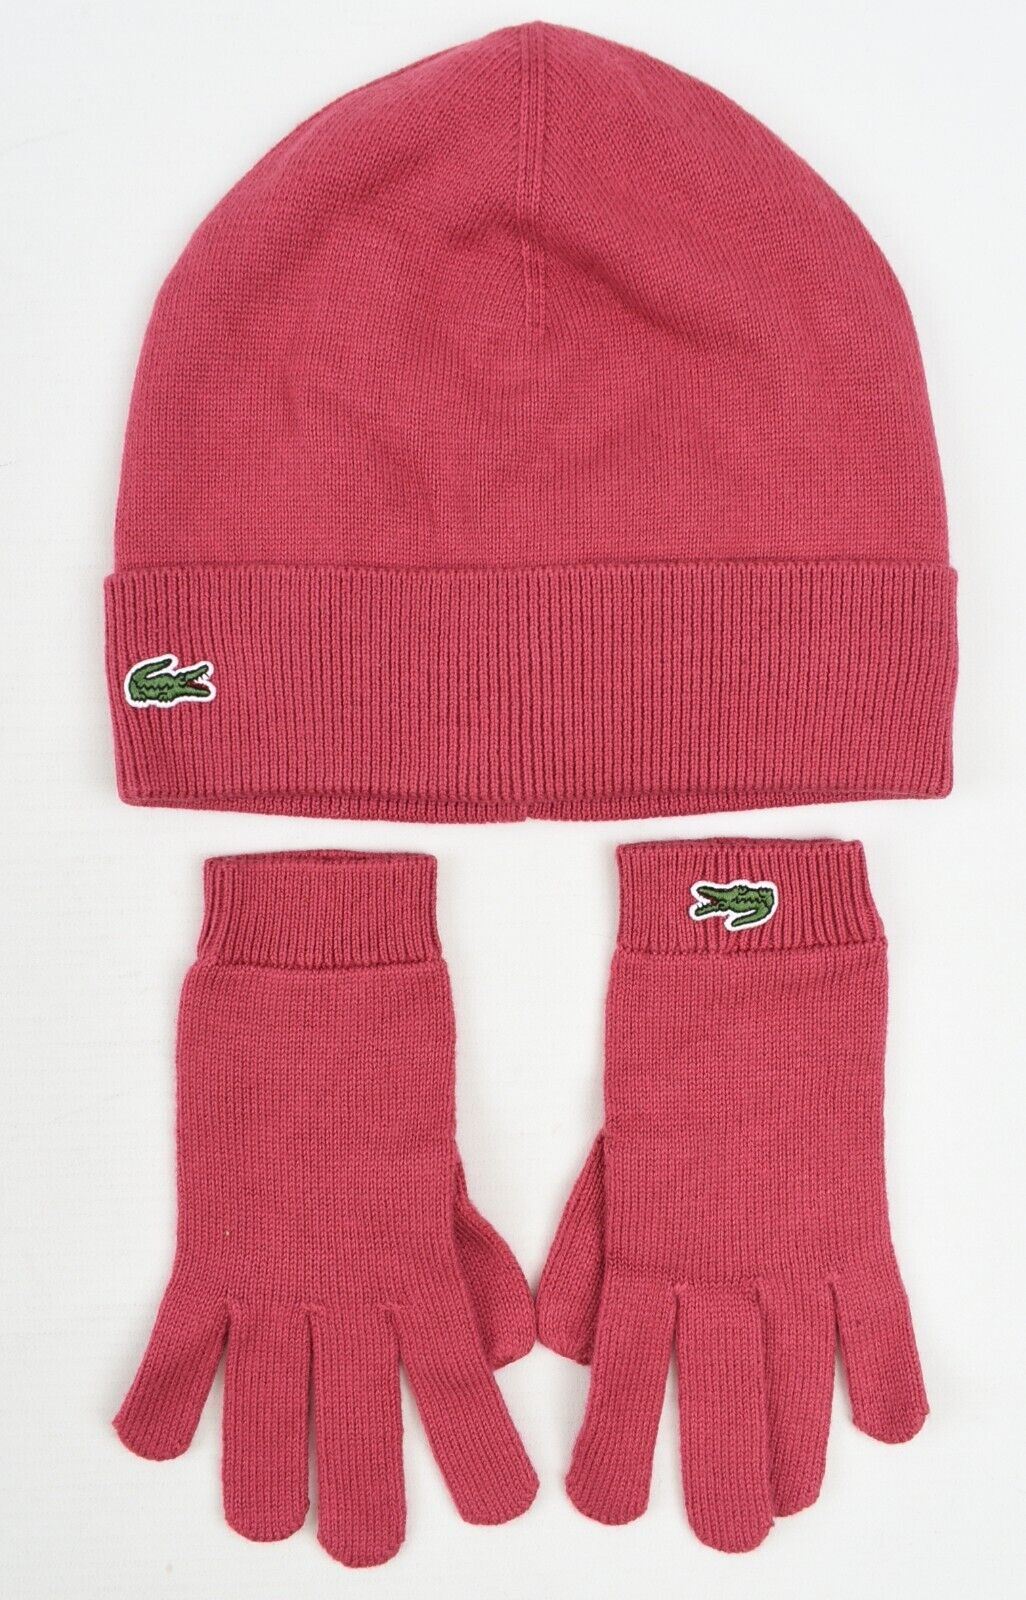 LACOSTE Girls 2-pc Winter Set, Beanie Hat + Gloves, Pink, size M (6-9 years)